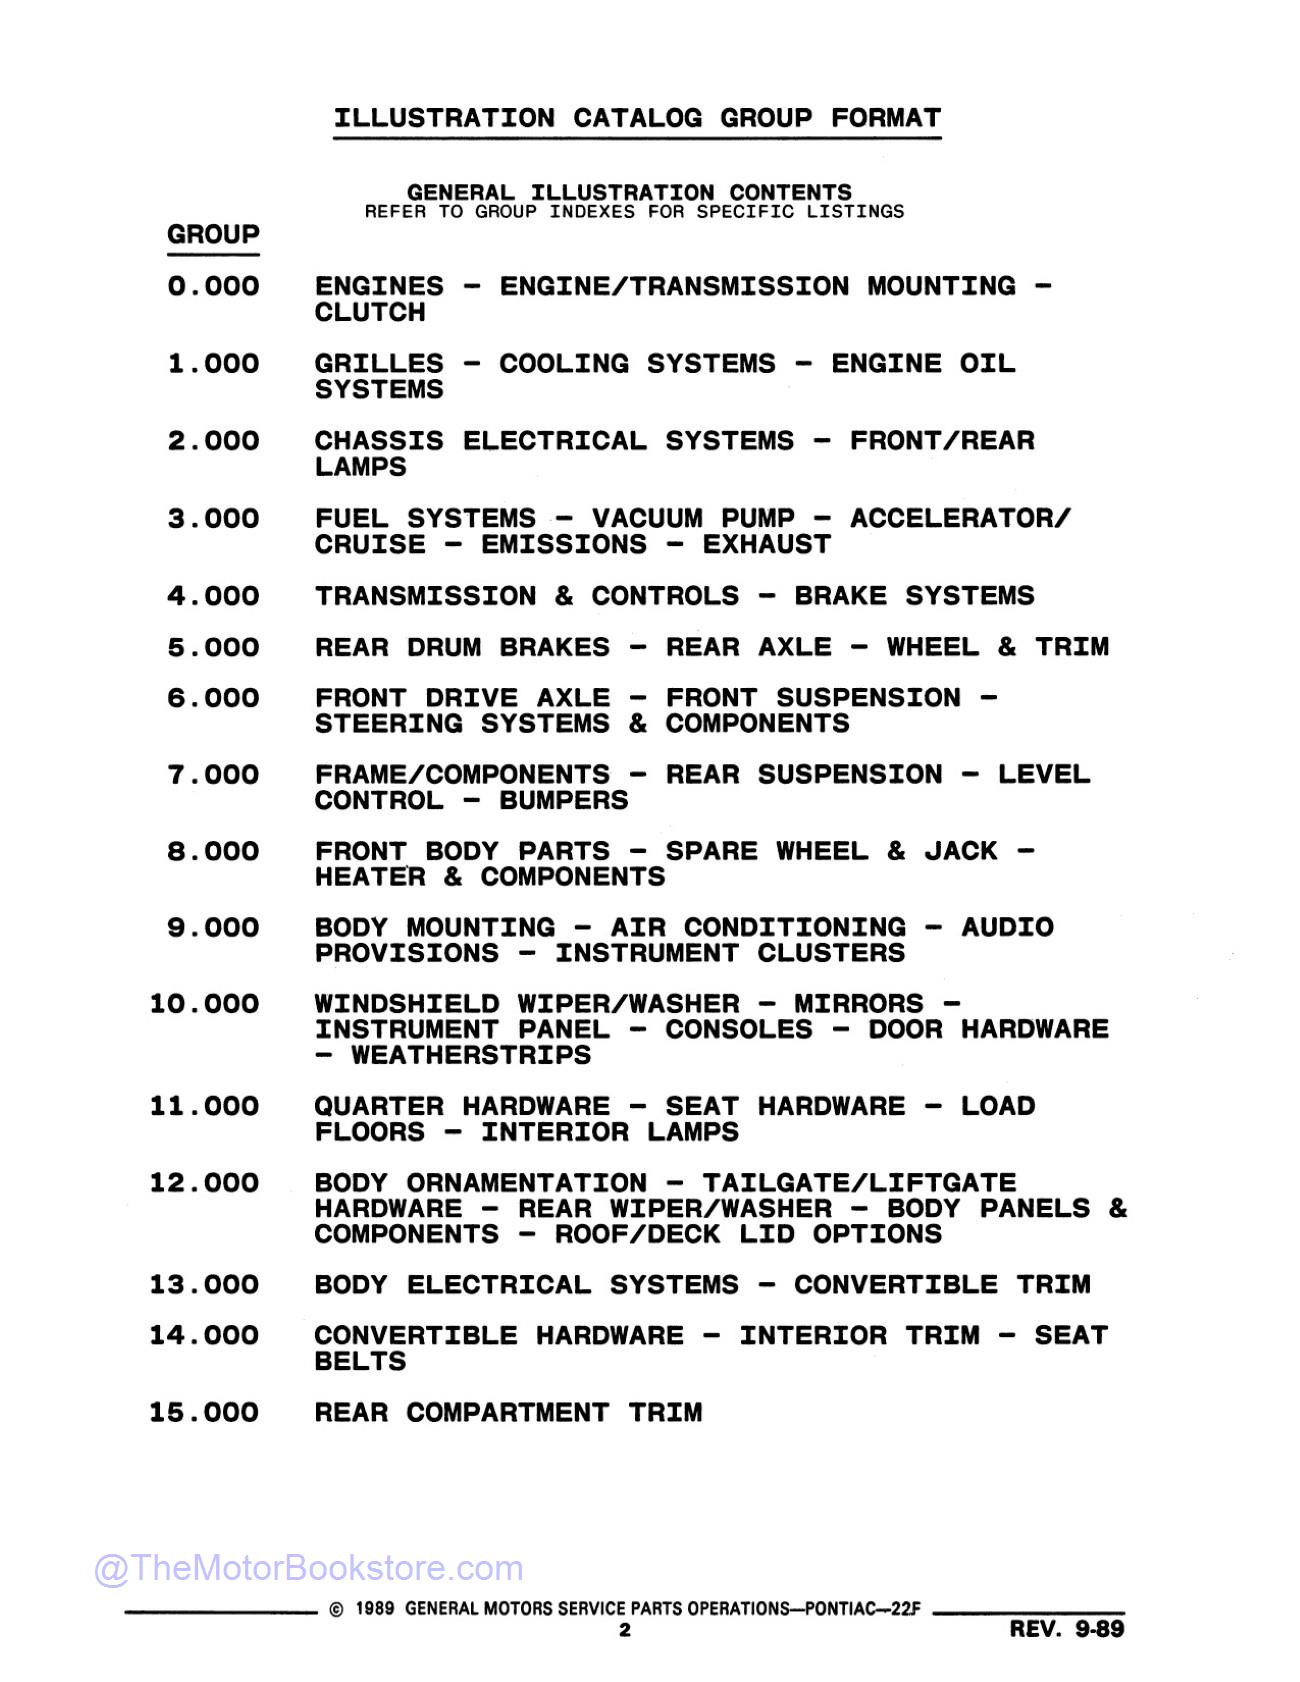 1990 Pontiac Firebird Parts & Illustrations Catalog  - Table of Contents 2